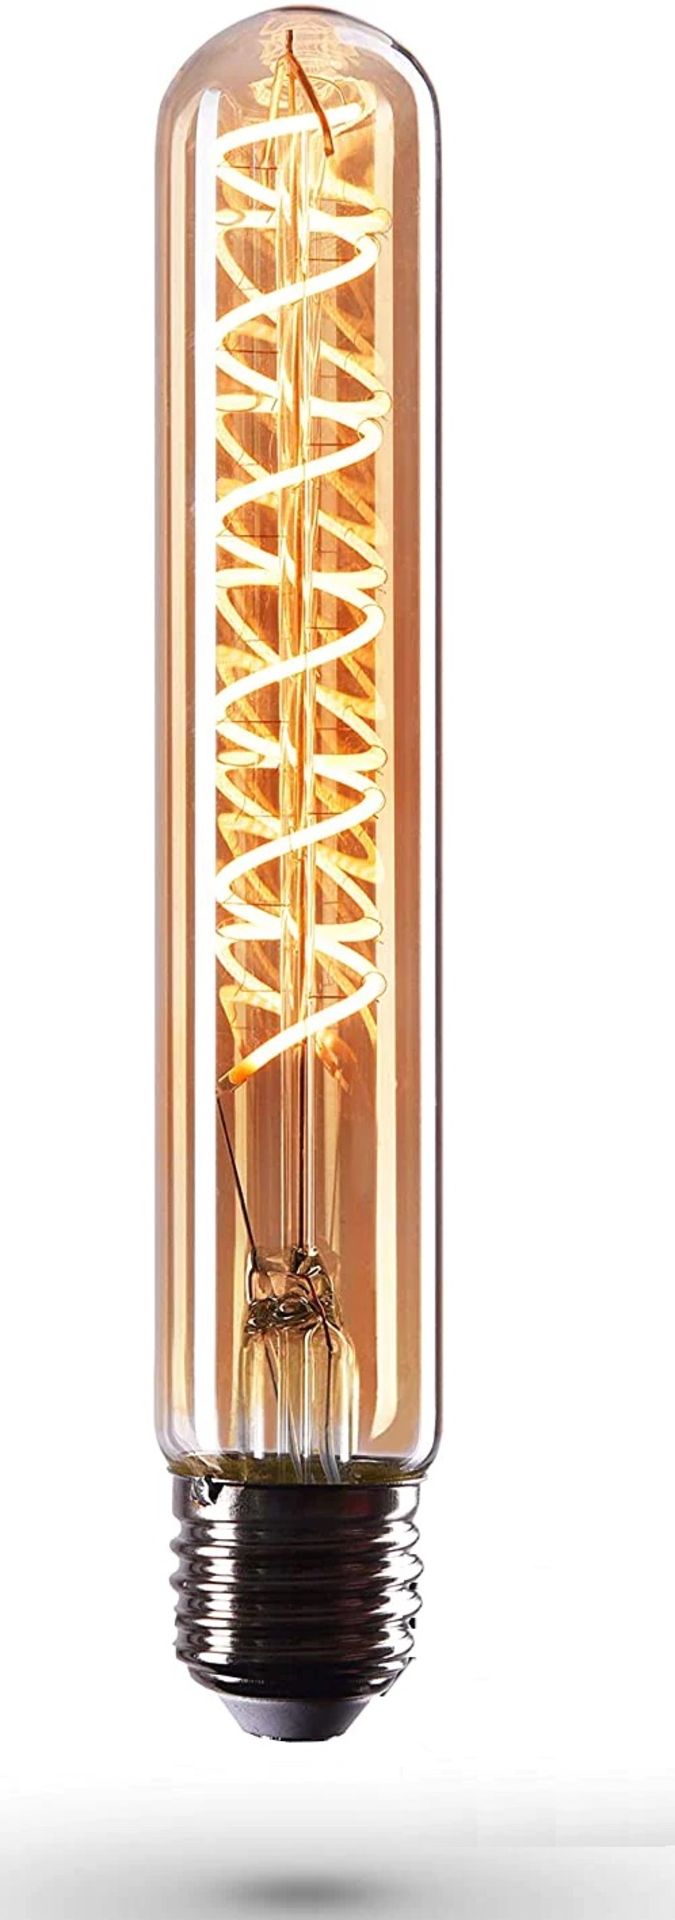 12 x CROWN LED Edison Flat Pipe Lightbulb 4W/40W Warm White - NEW & BOXED - BIG RRP! - Image 5 of 7